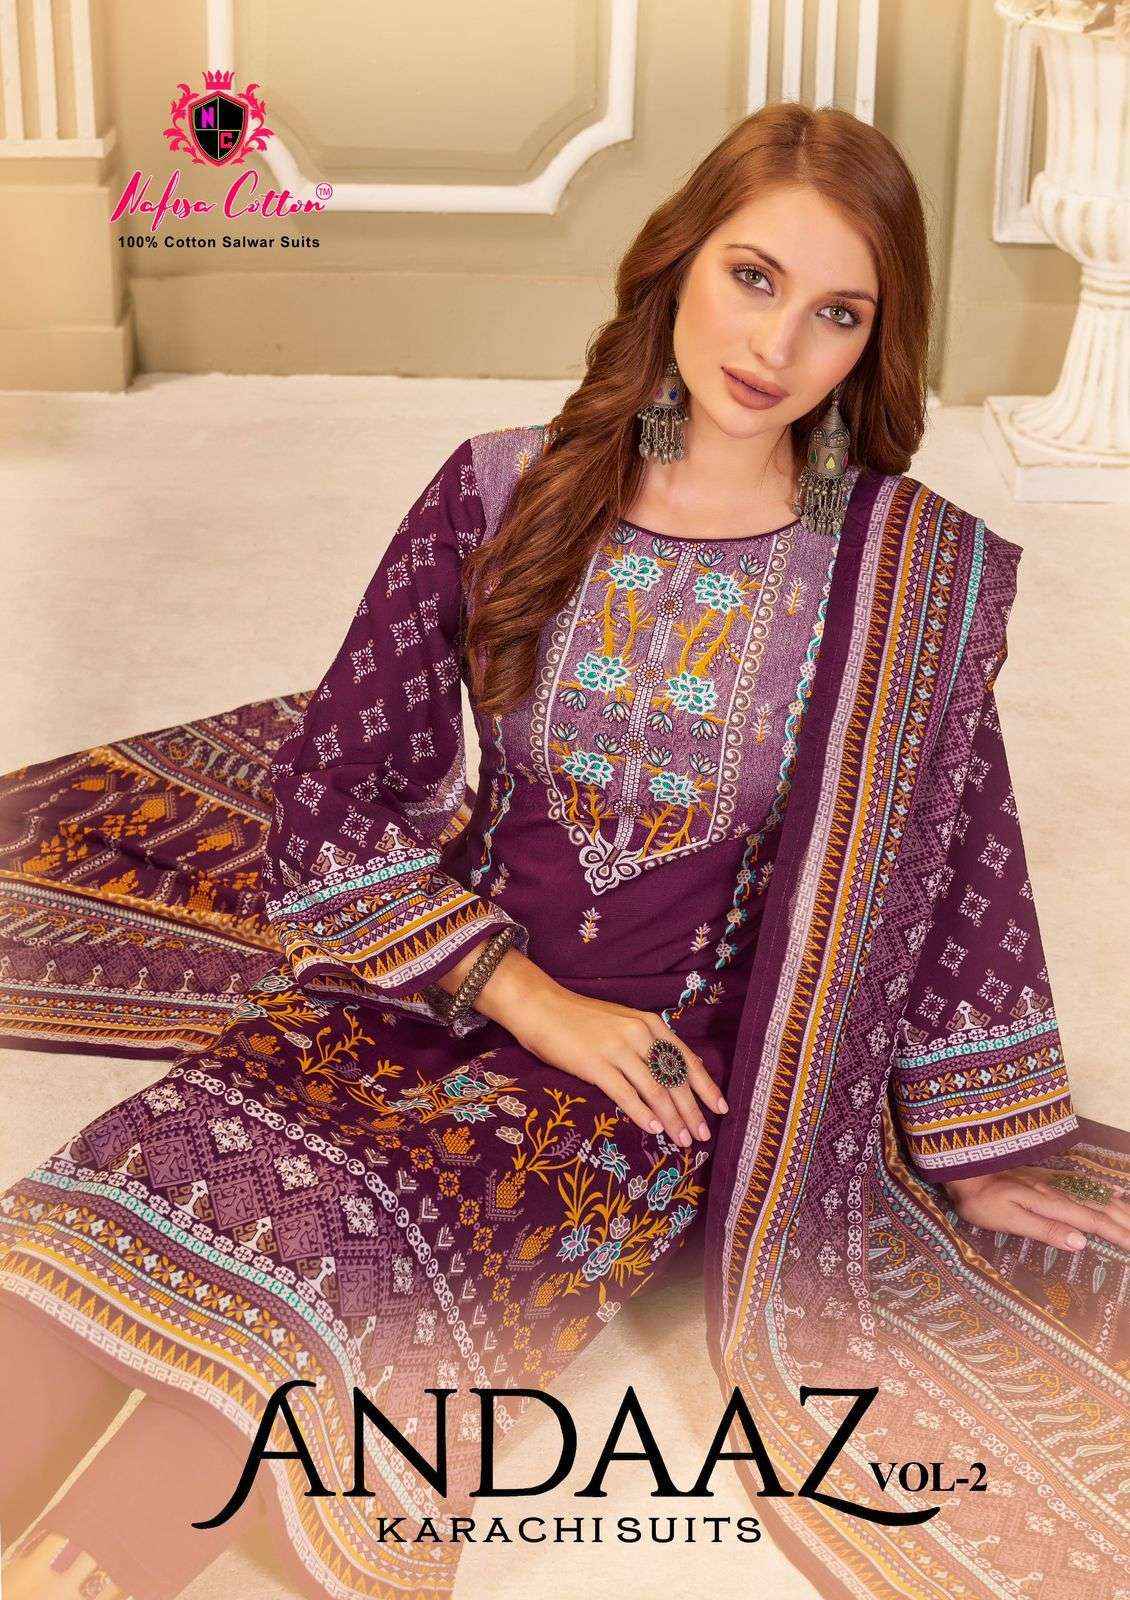 nafisa cotton andaaz karachi suits vol 2 cotton dress material 6 pcs catalogue 2024 01 04 23 41 51